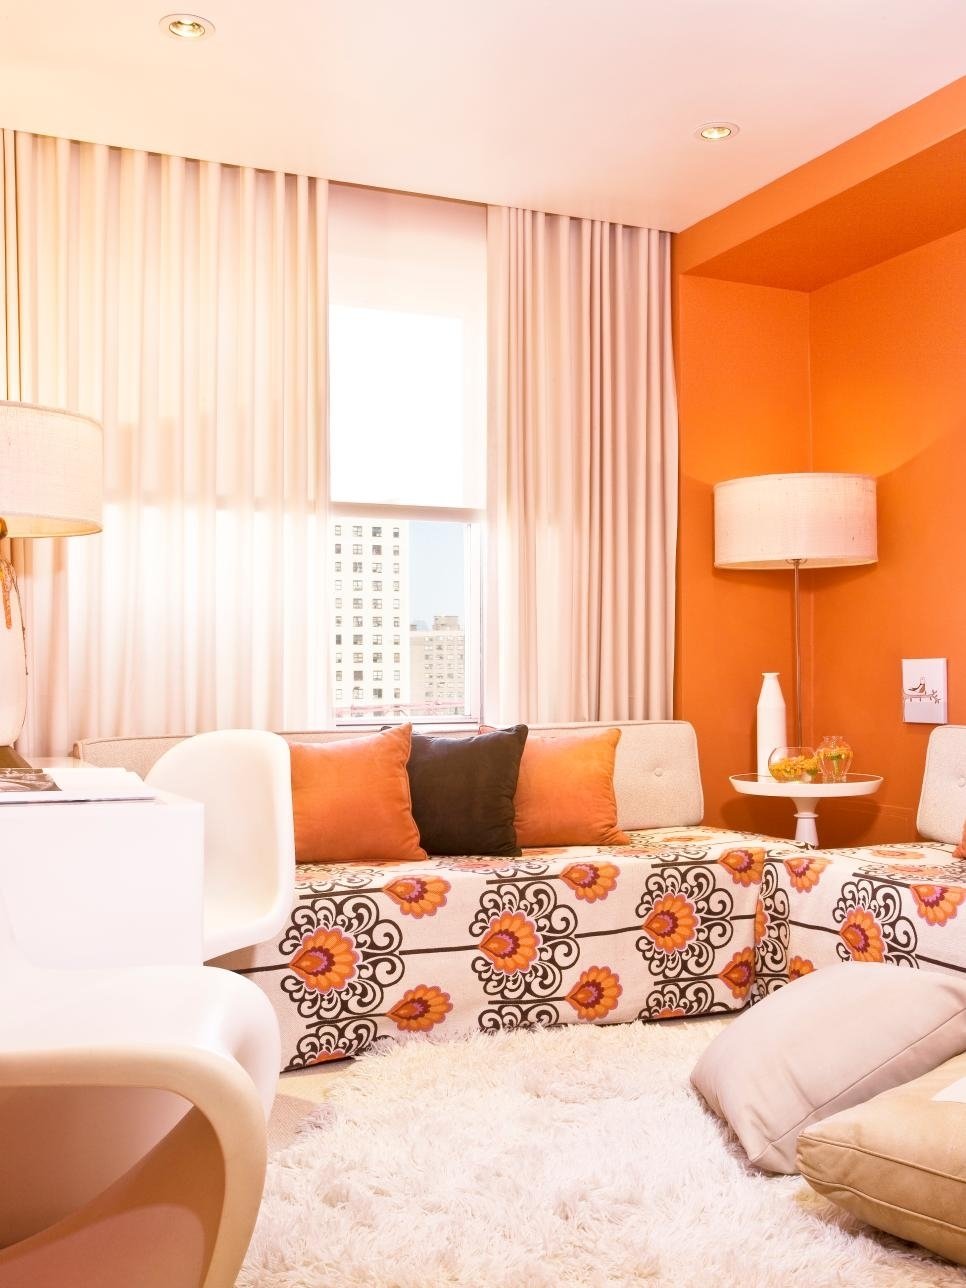 10 Elegant Living Room Color Ideas For Small Spaces small living room design ideas and color schemes hgtv living room 2022